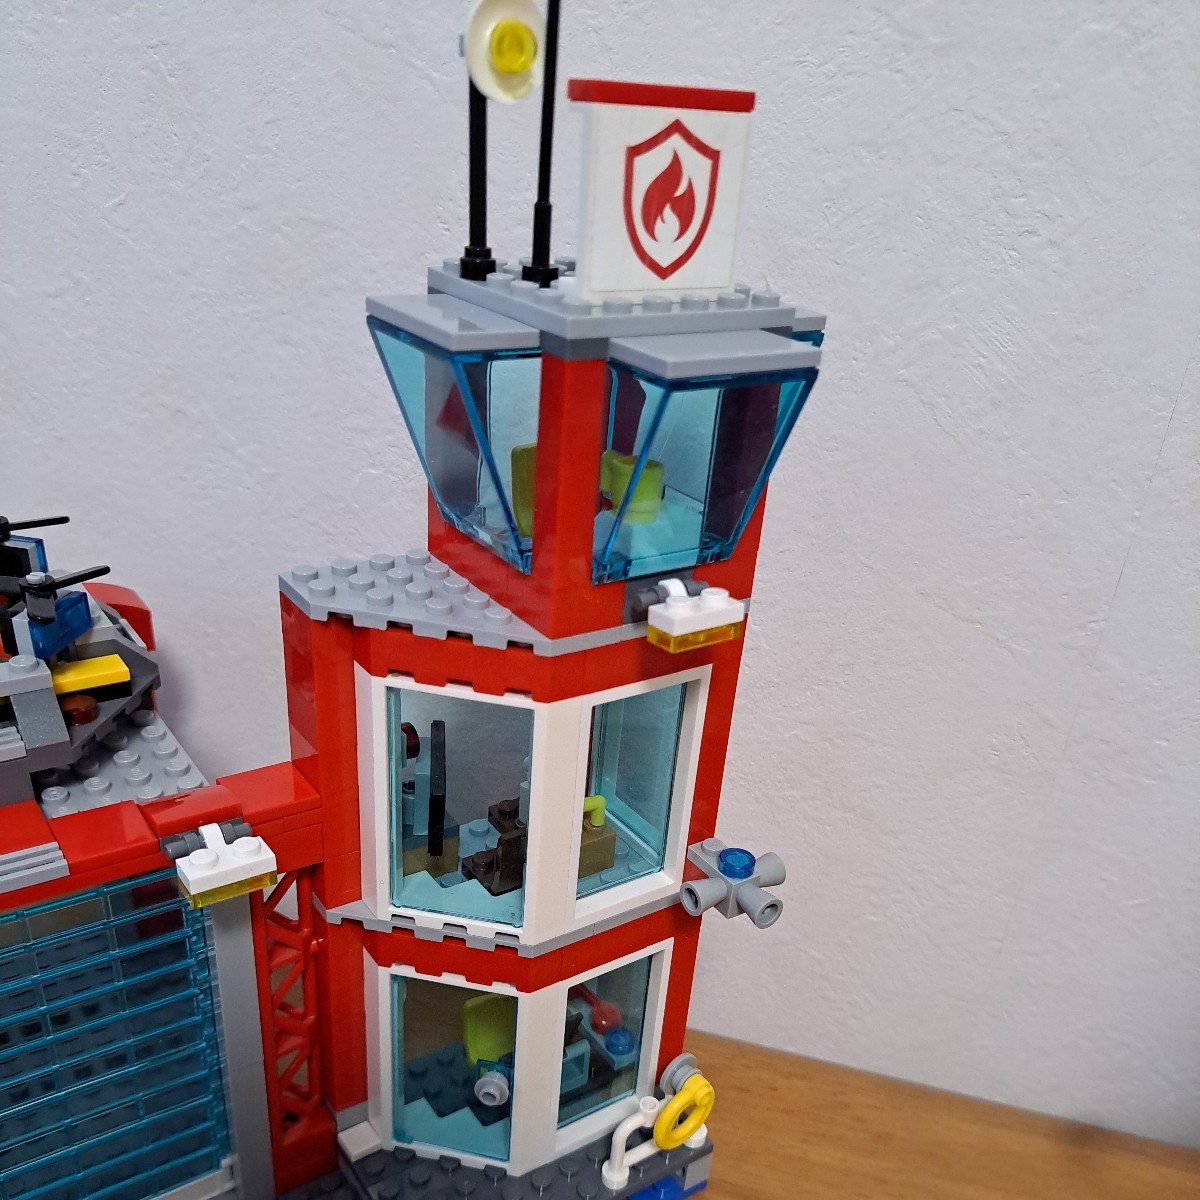 LEGO レゴ 60215 シティ 消防署 消防士 消防車 レスキュー ドローン 正規品 Fire Station